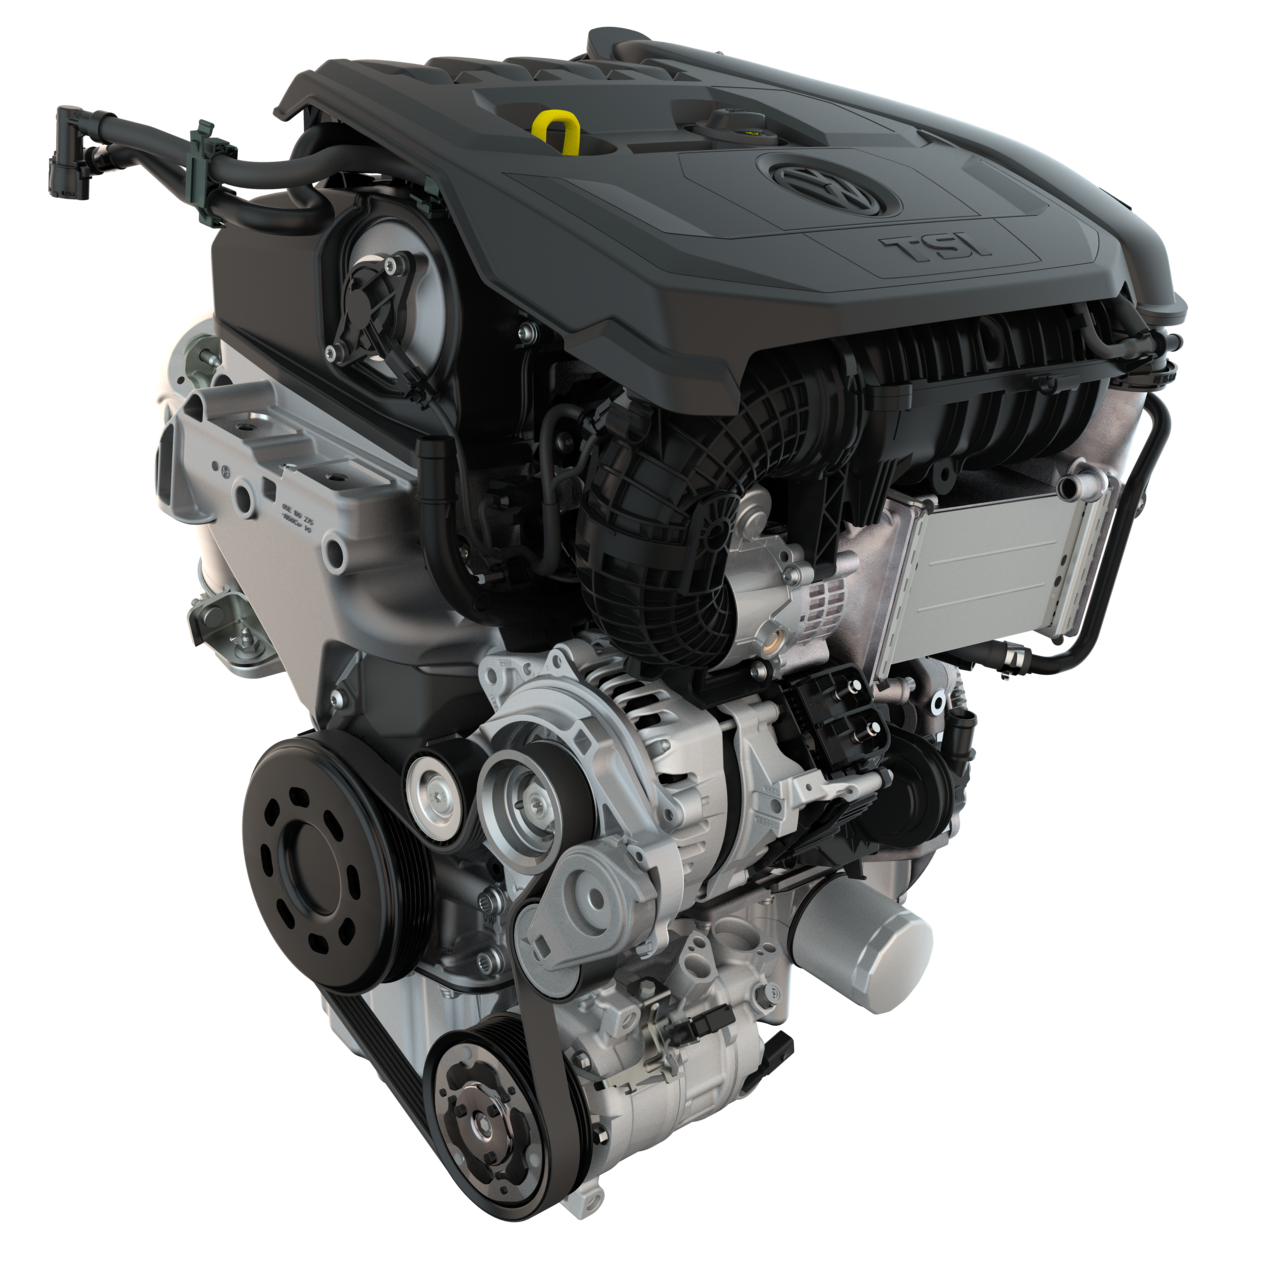 EA211 엔진은 새로운 세대의 VAG 자동차의 주력 엔진입니다.